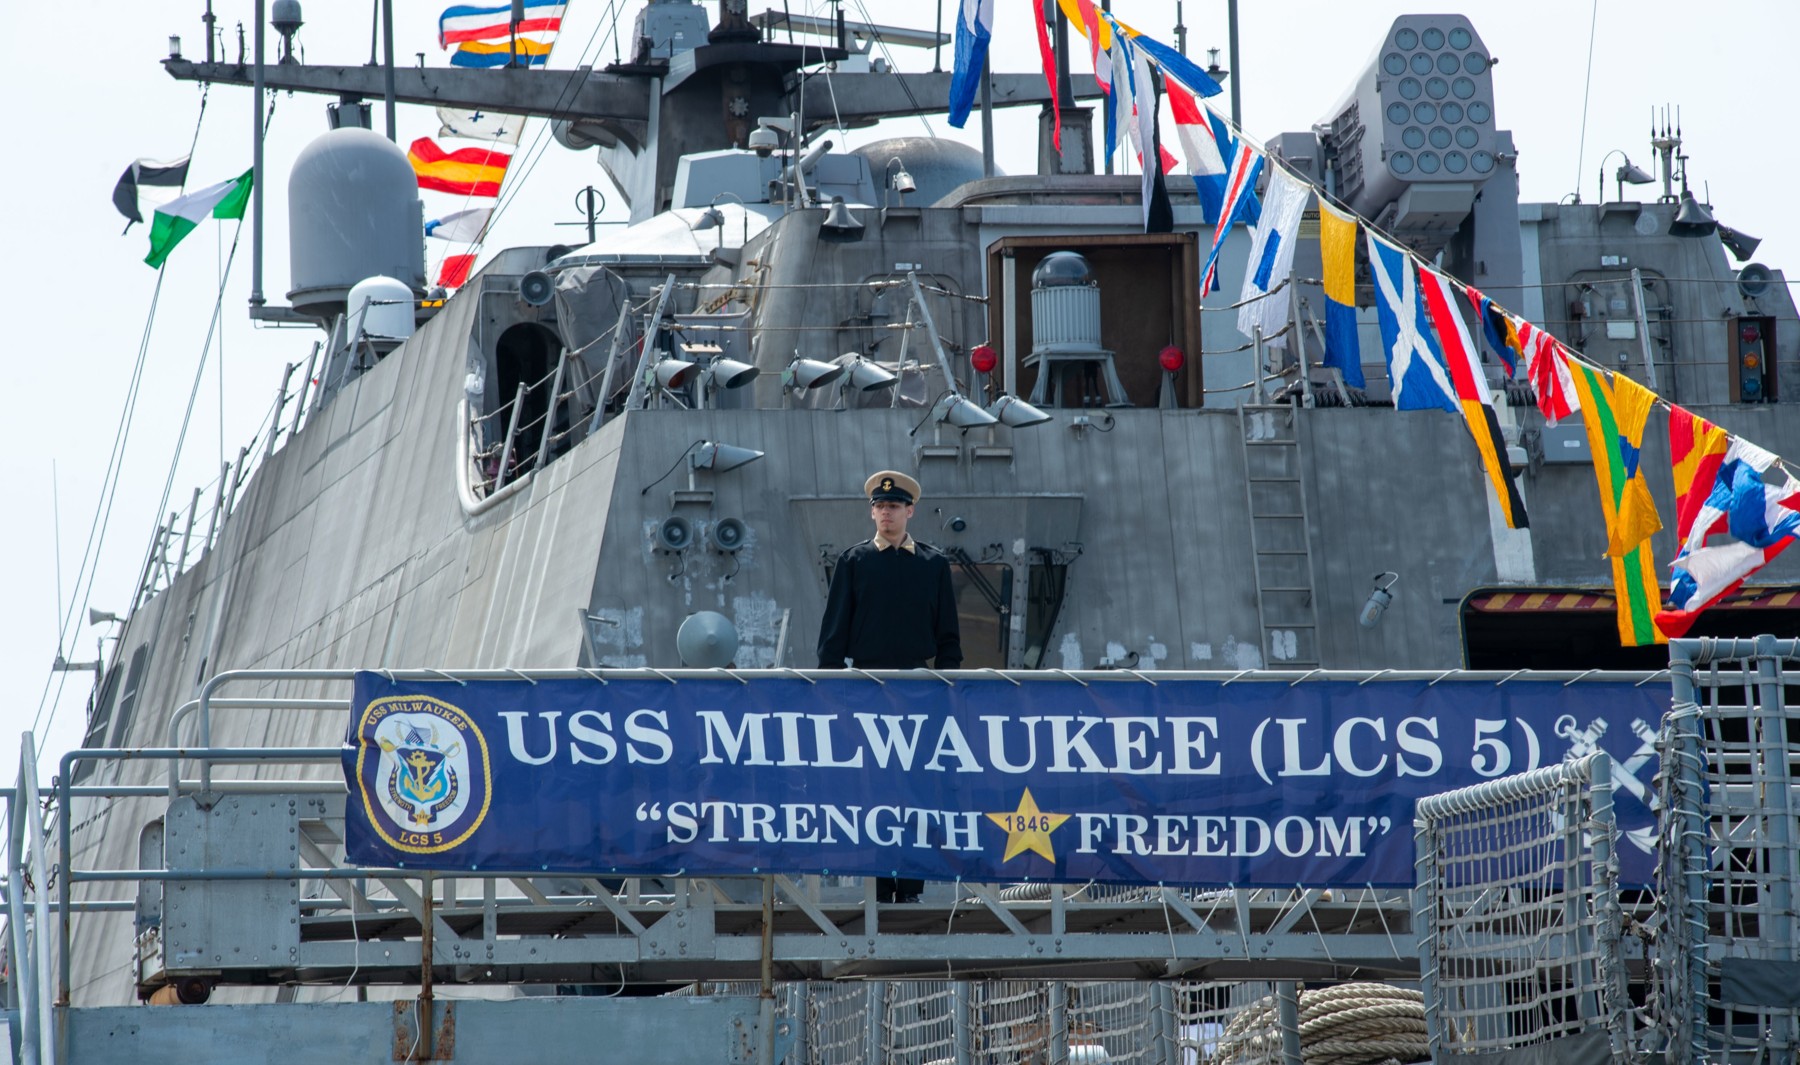 lcs-5 uss milwaukee freedom class littoral combat ship us navy fleet week new york 61